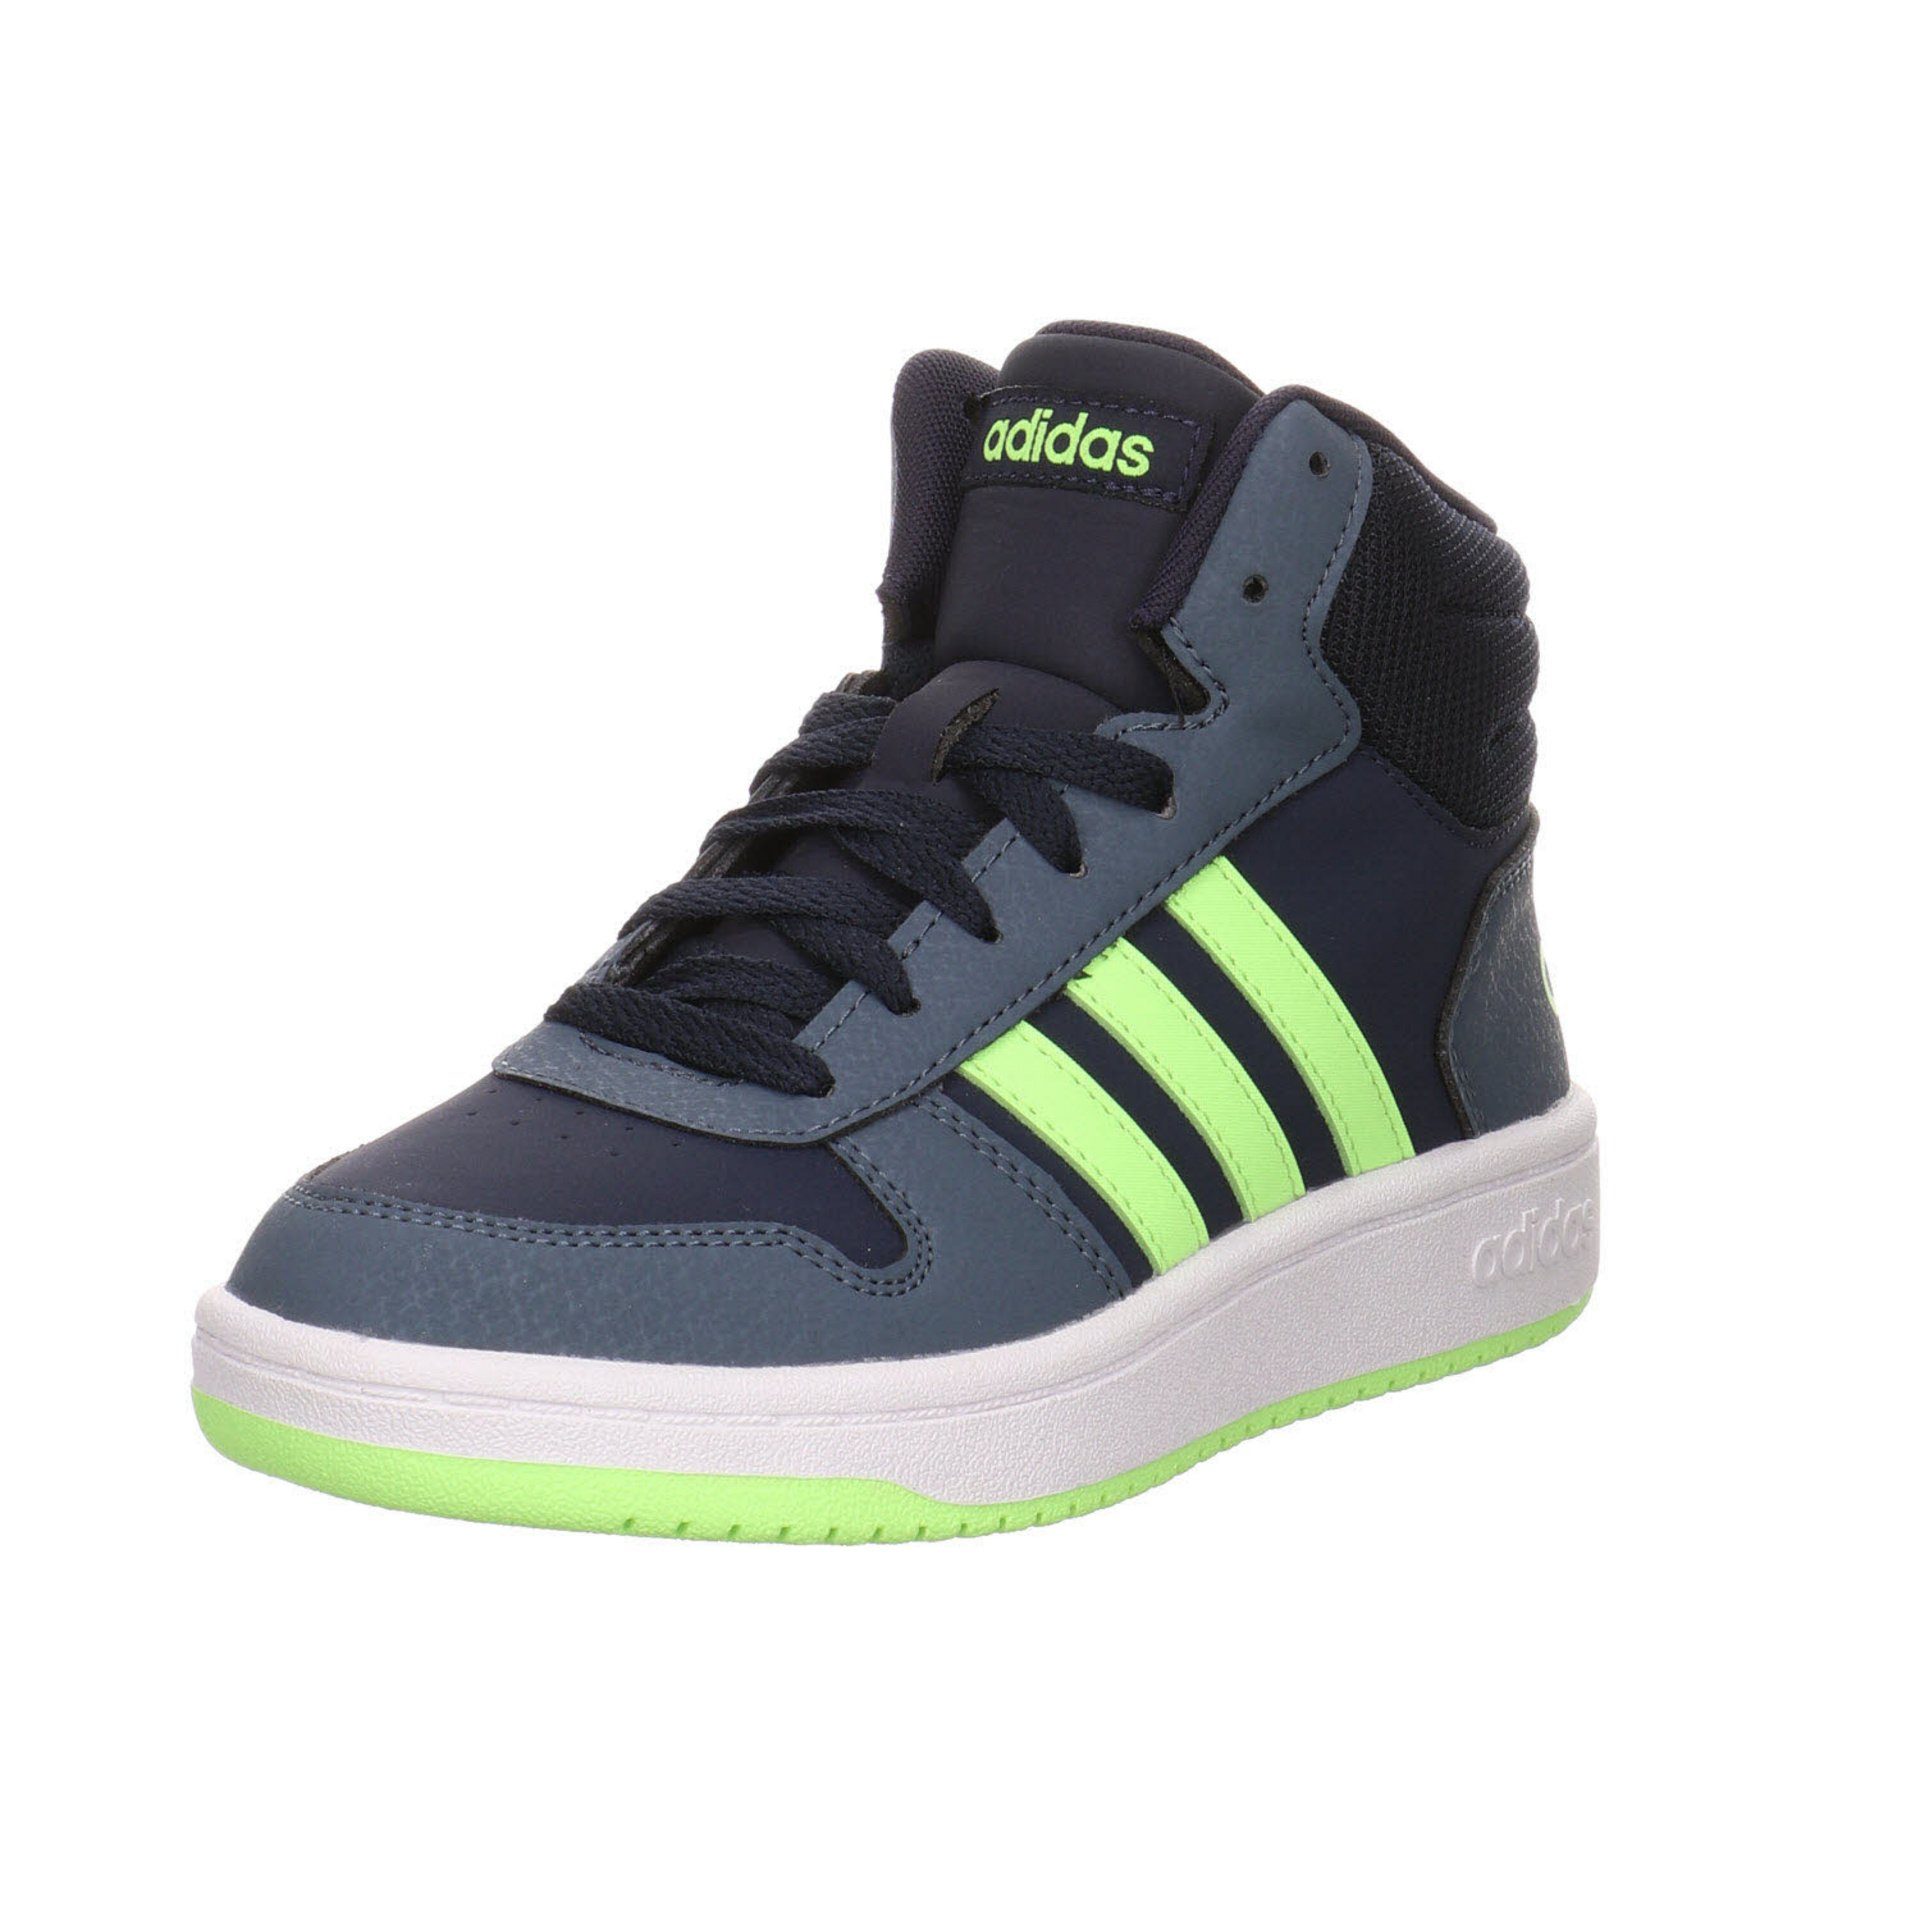 adidas Originals Jungen Sneaker Schuhe Hoops Mid 2.0 K Sneaker Stiefelette  Synthetikkombination